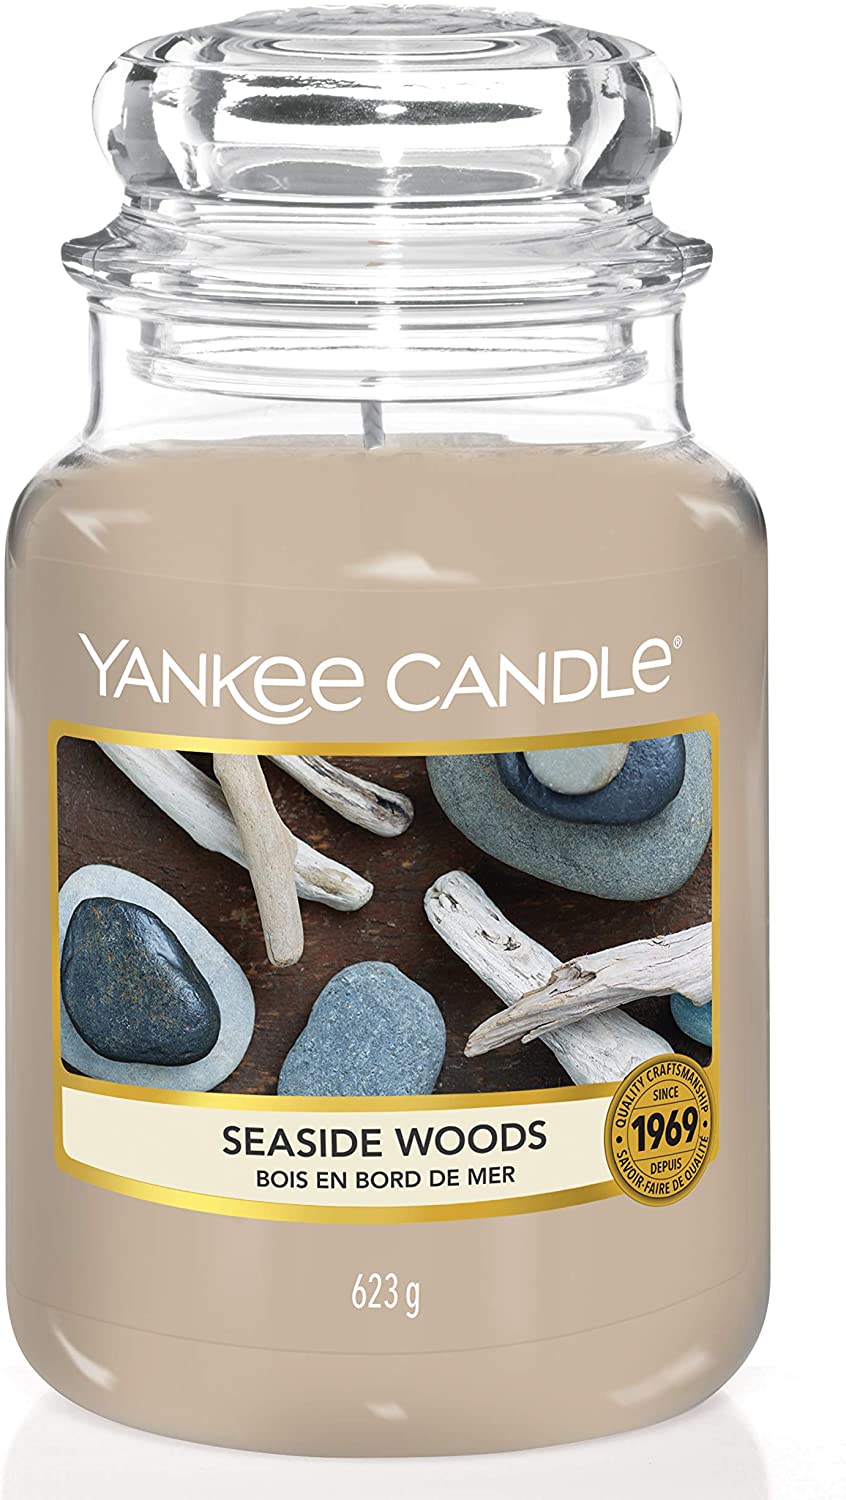 Yankee Candle Jar Candle In Jar